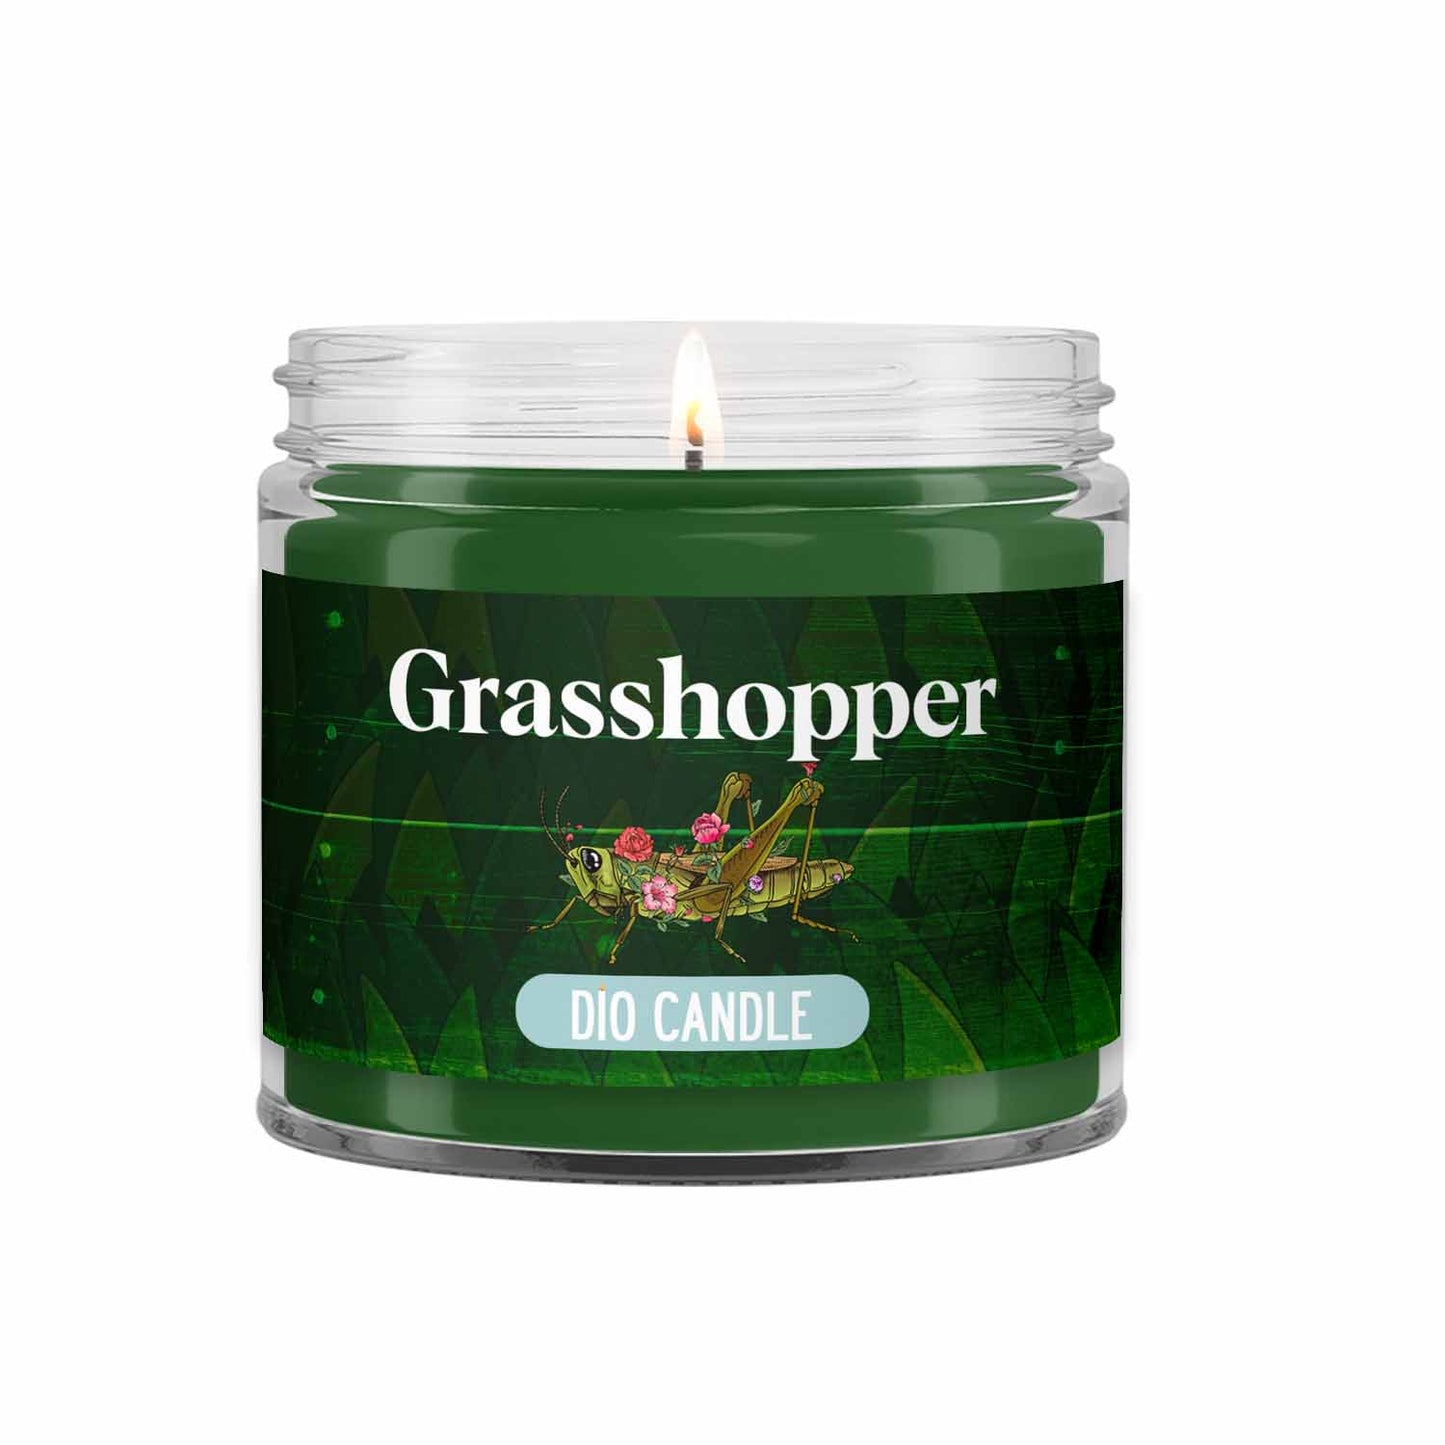 Grasshopper Candle